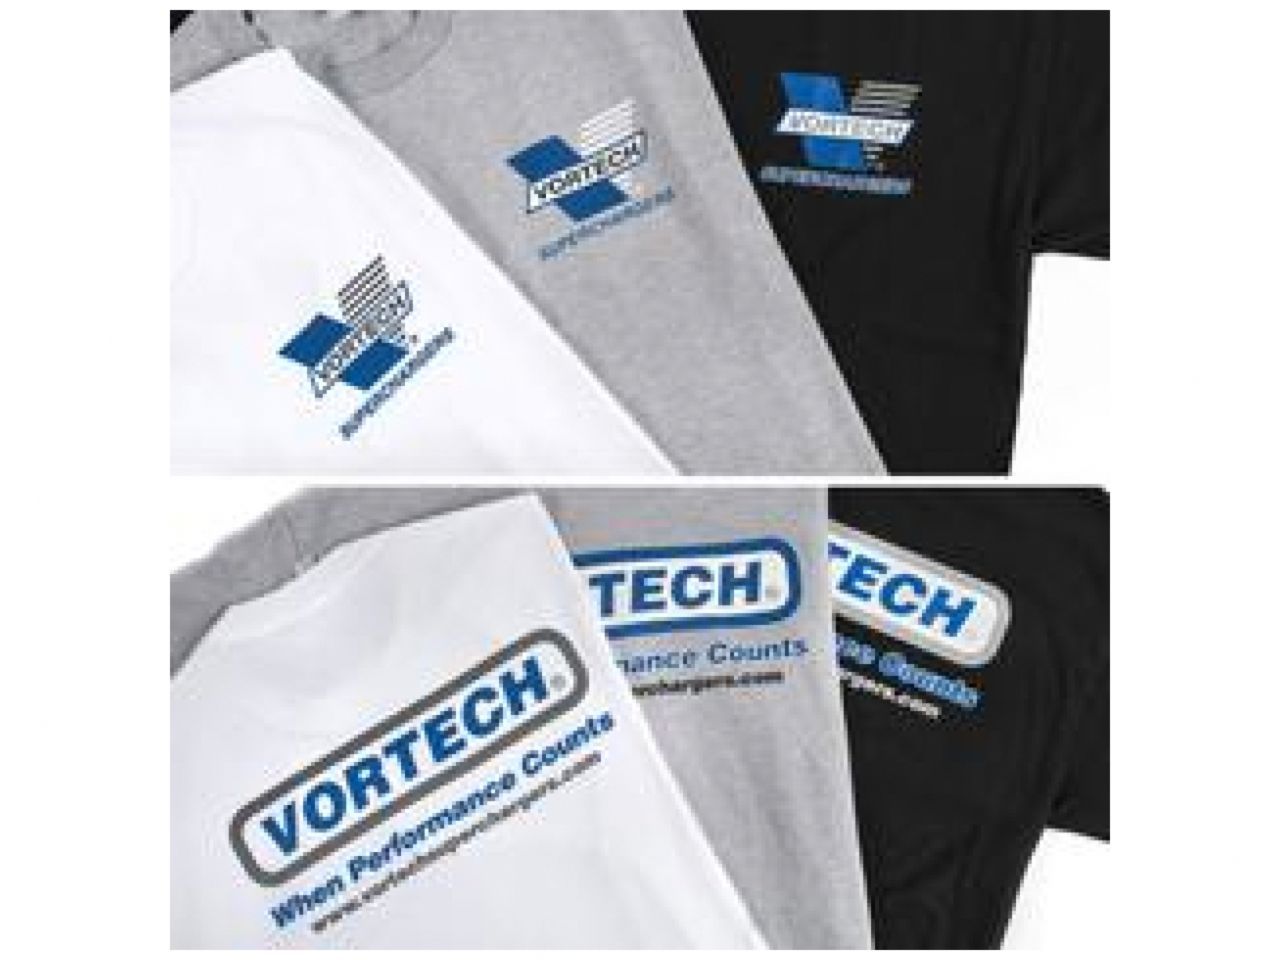 Vortech Shirts 008046 Item Image